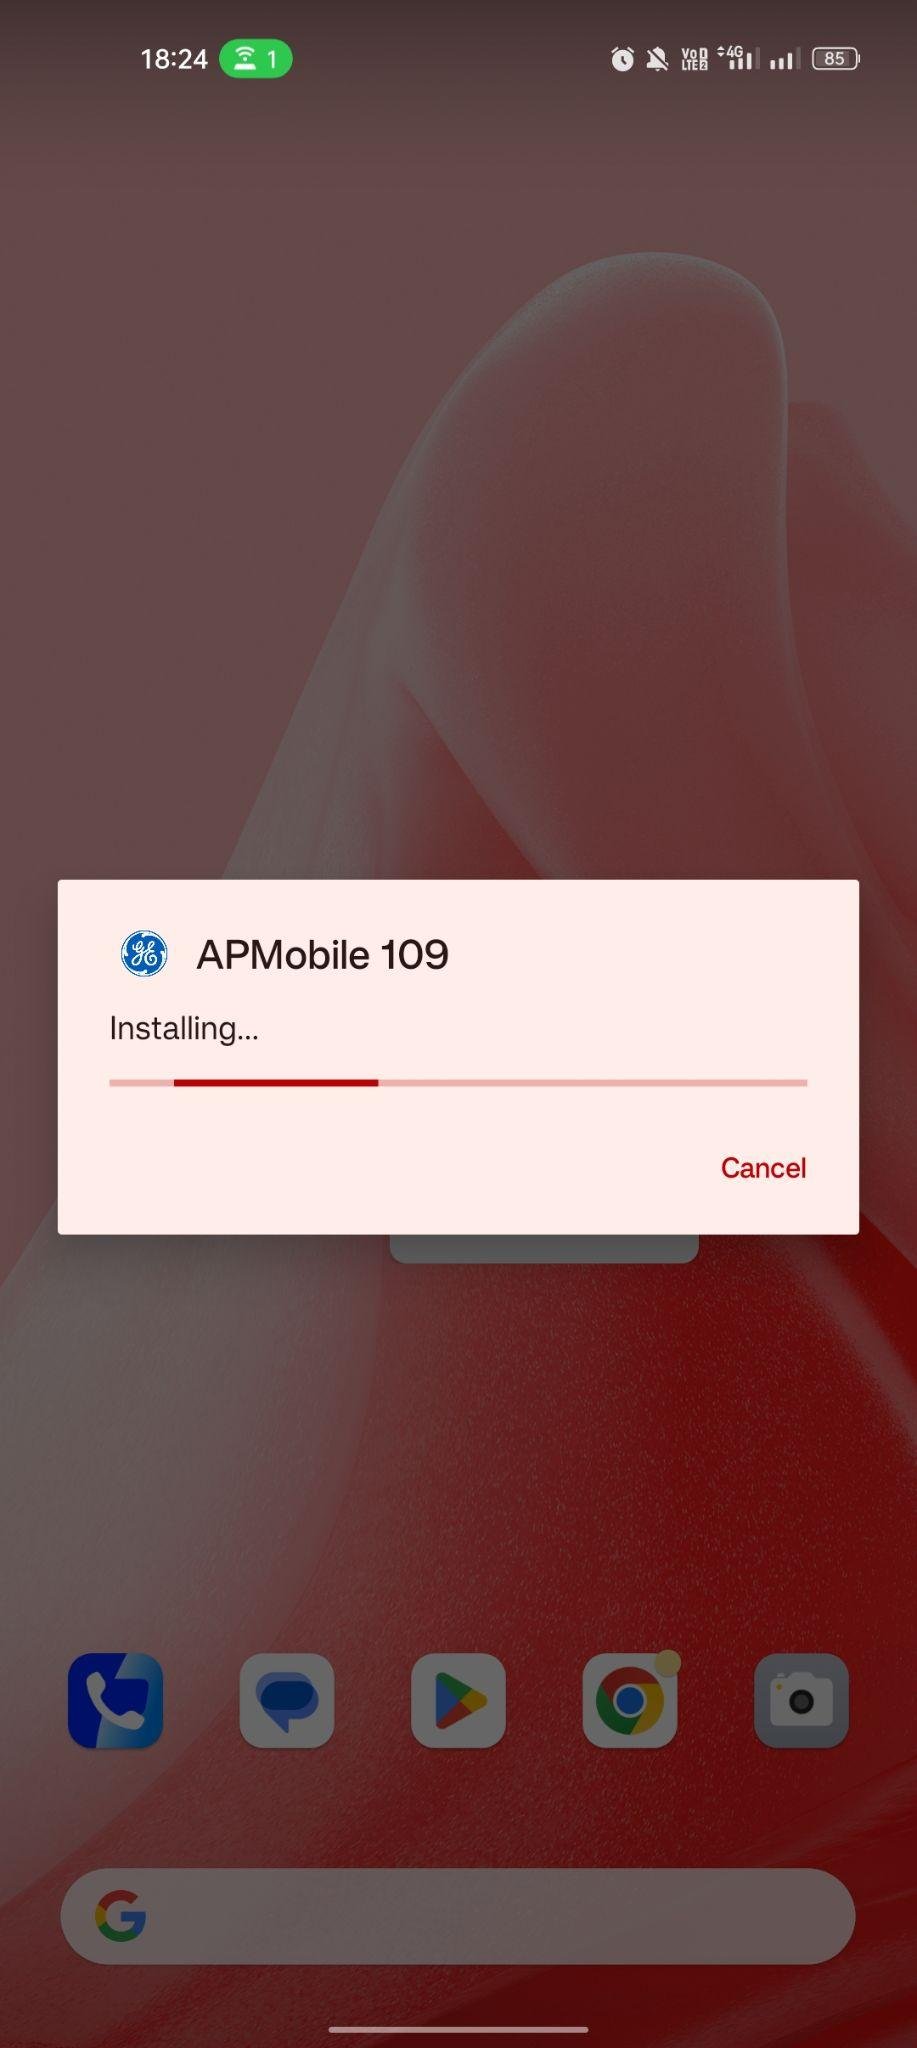 AP Mobile 109 apk installing